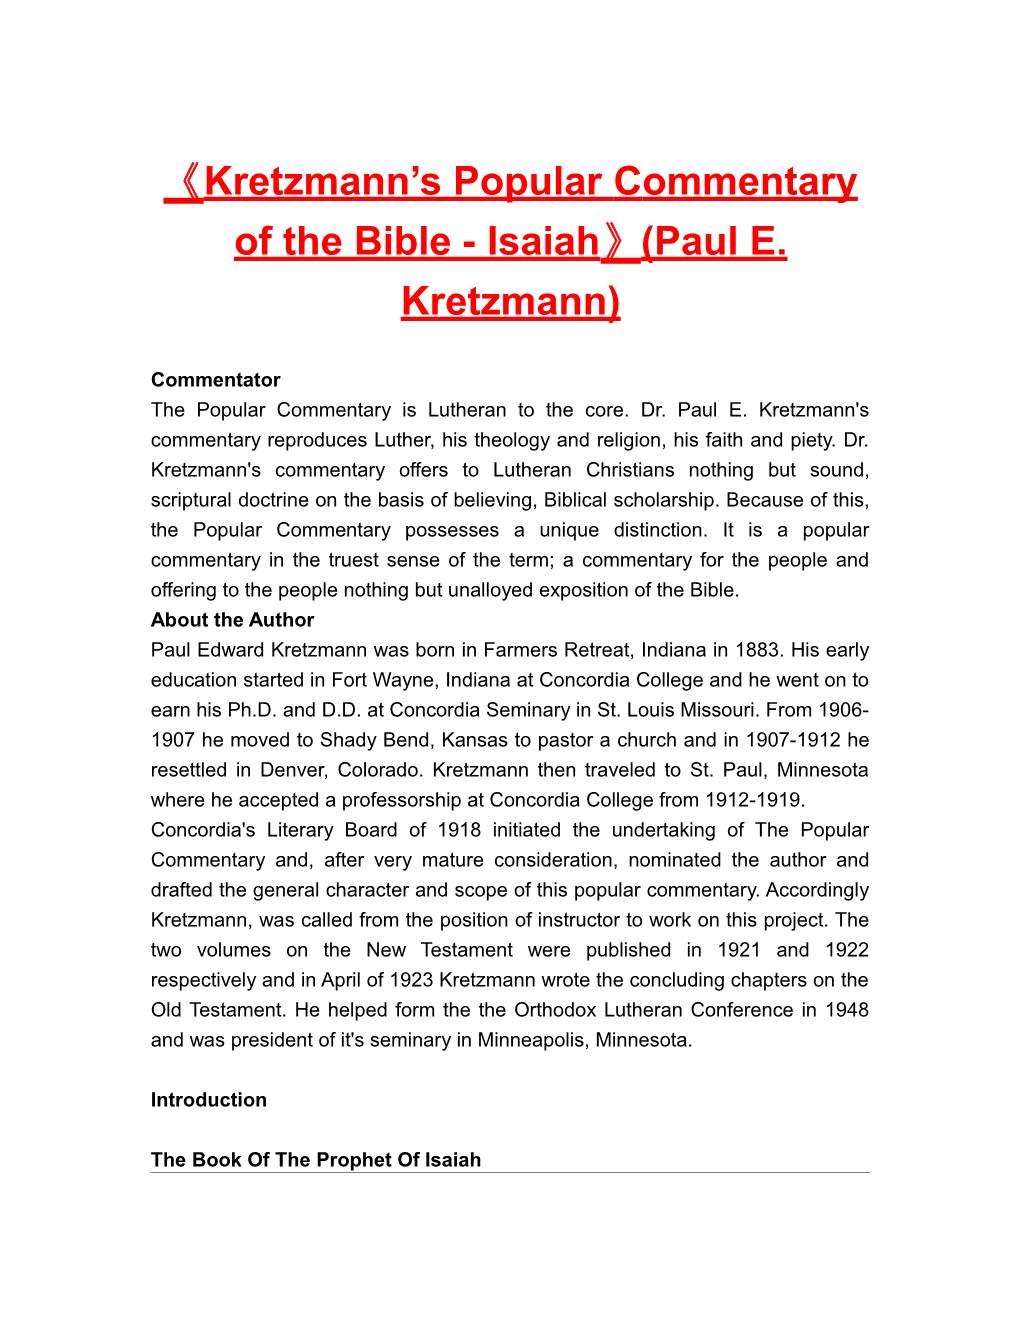 Kretzmann S Popular Commentary of the Bible - Isaiah (Paul E. Kretzmann)